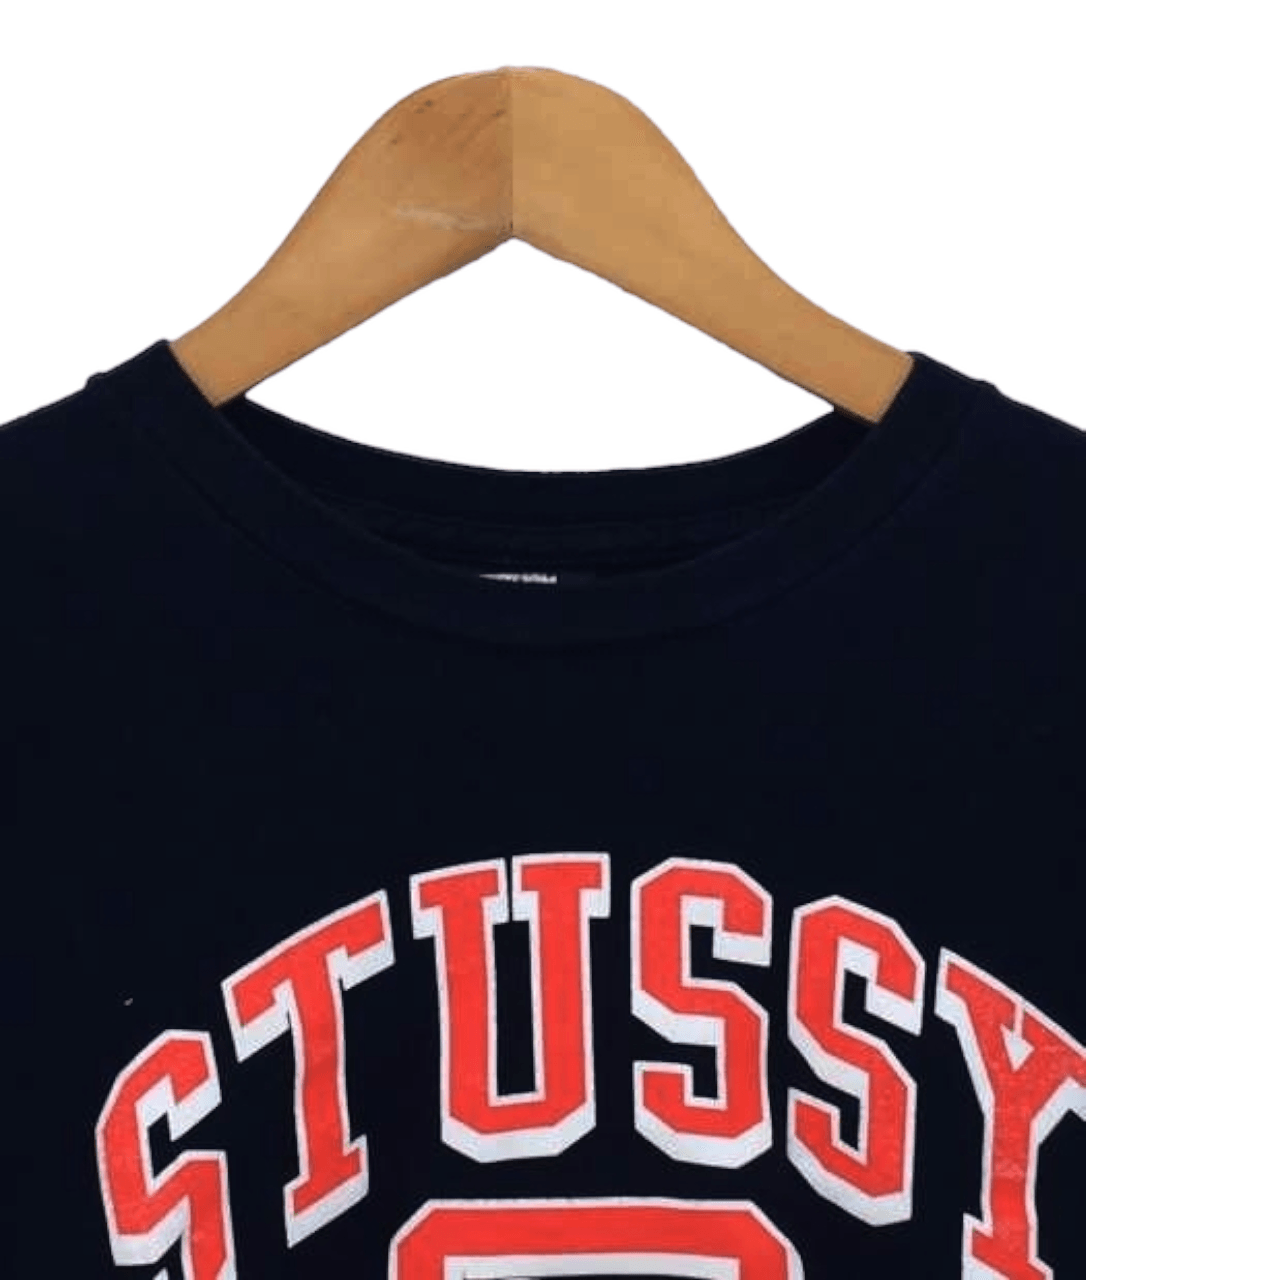 Stussy Men's Crew Neck Short Sleeve T-shirt - Known Source